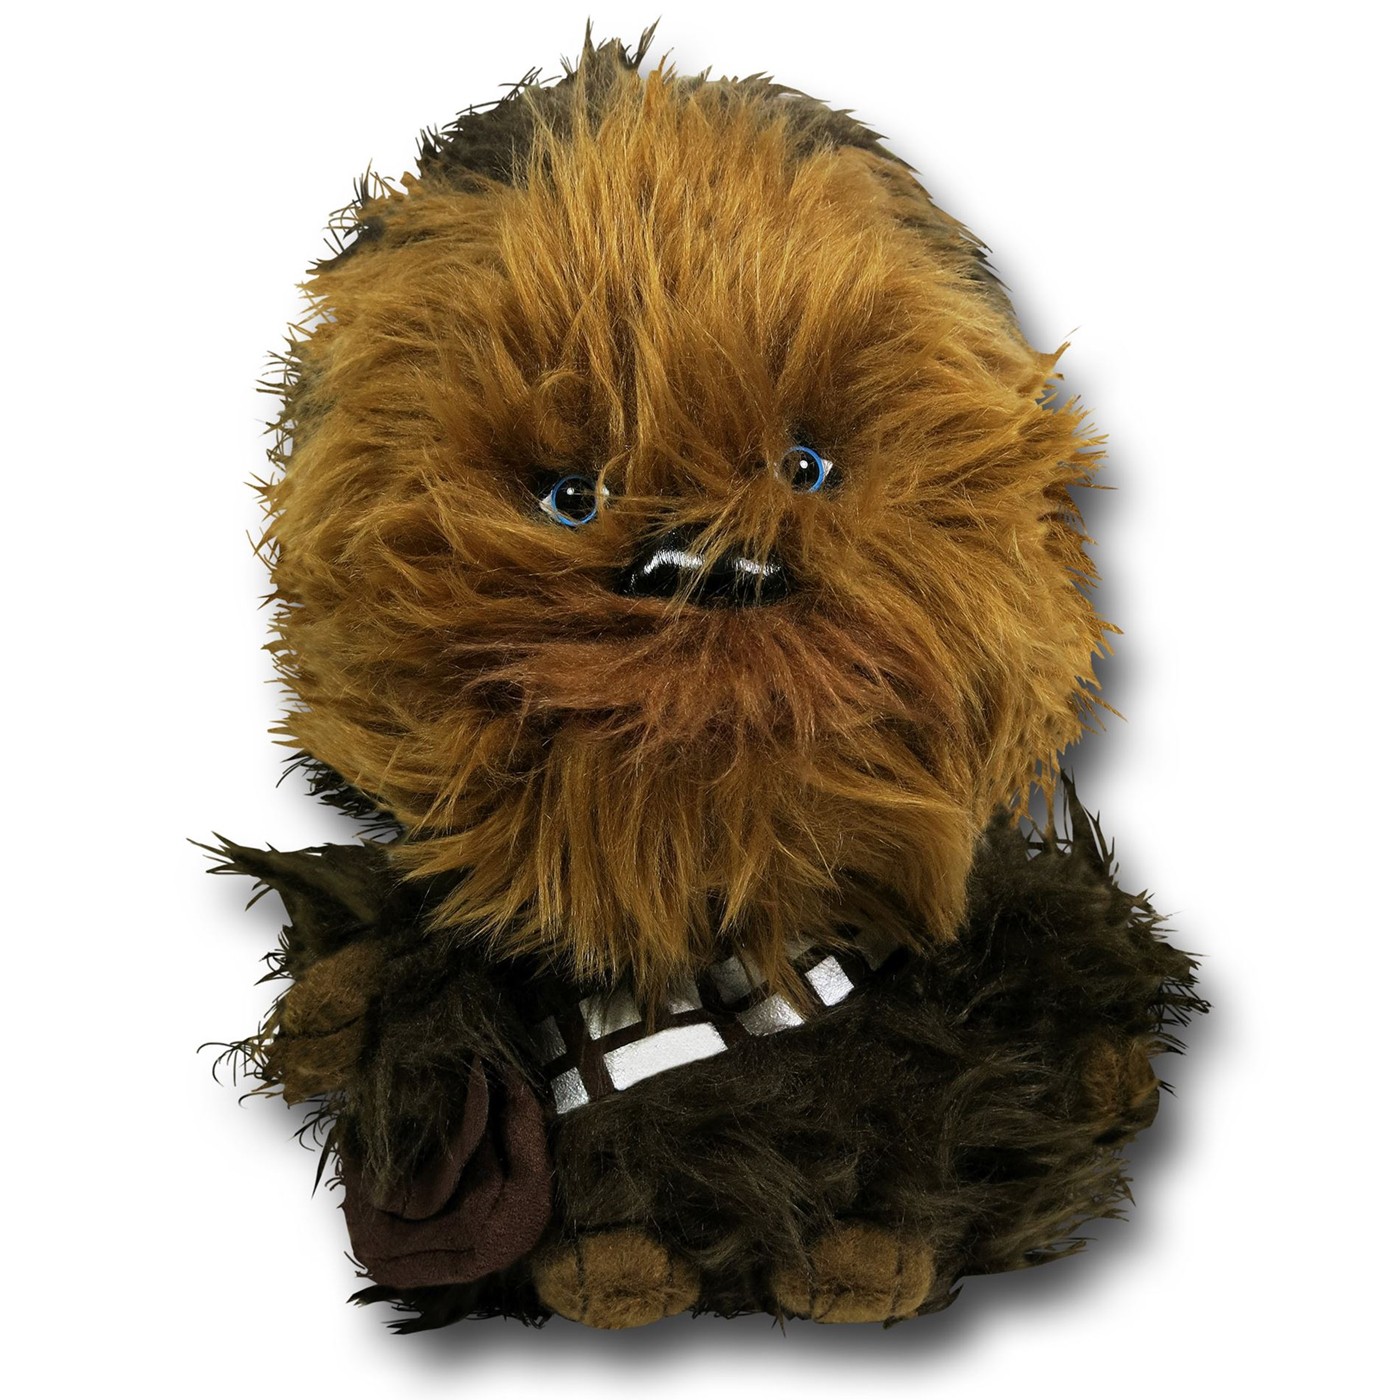 Star Wars Chewbacca Talking Plush Toy